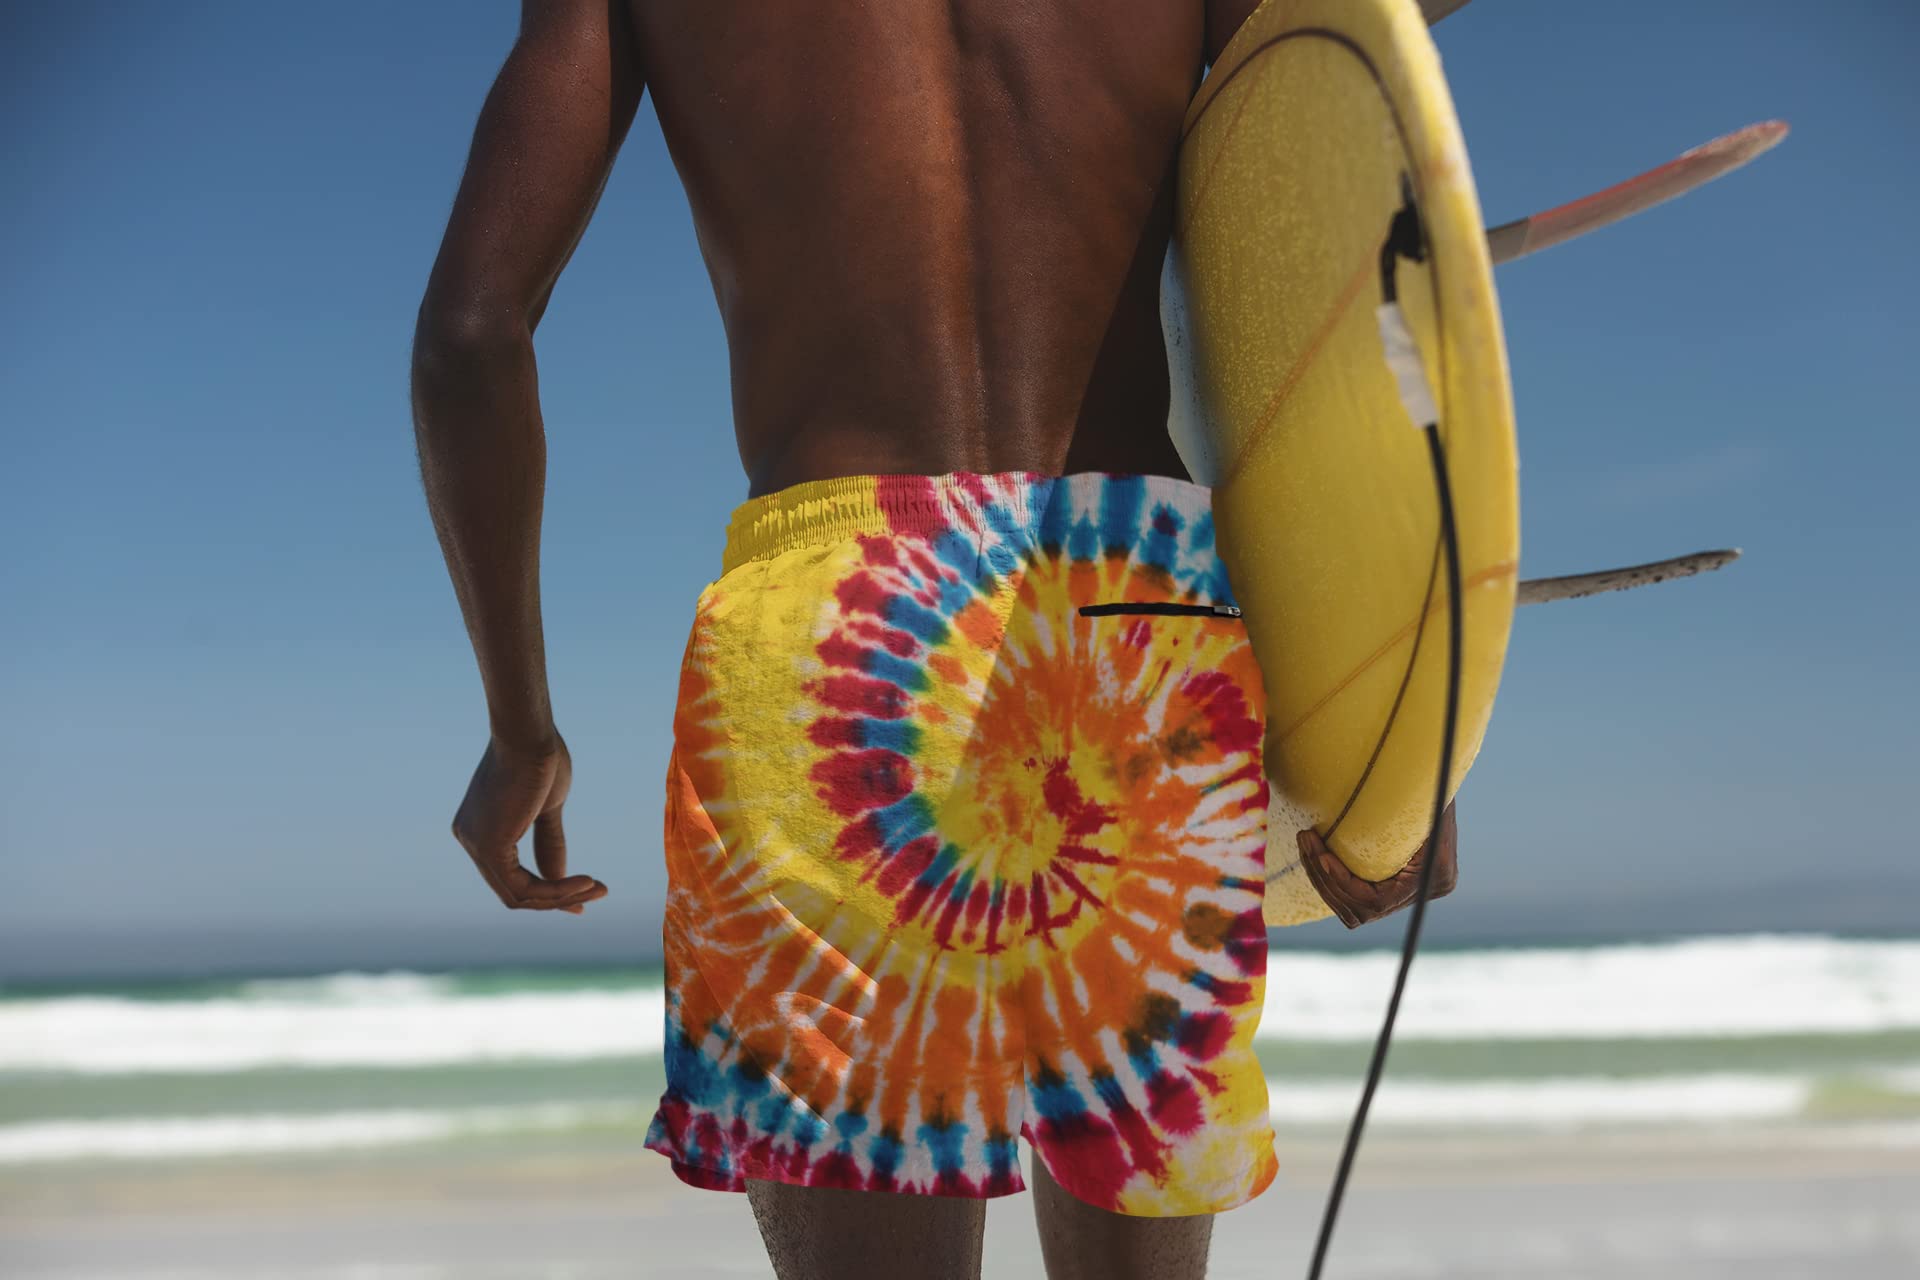 Men's 9" Inseam Swim Trunks With Compression Liner Quick Dry Swim Bathing Suit - Tie Dye Rainbow